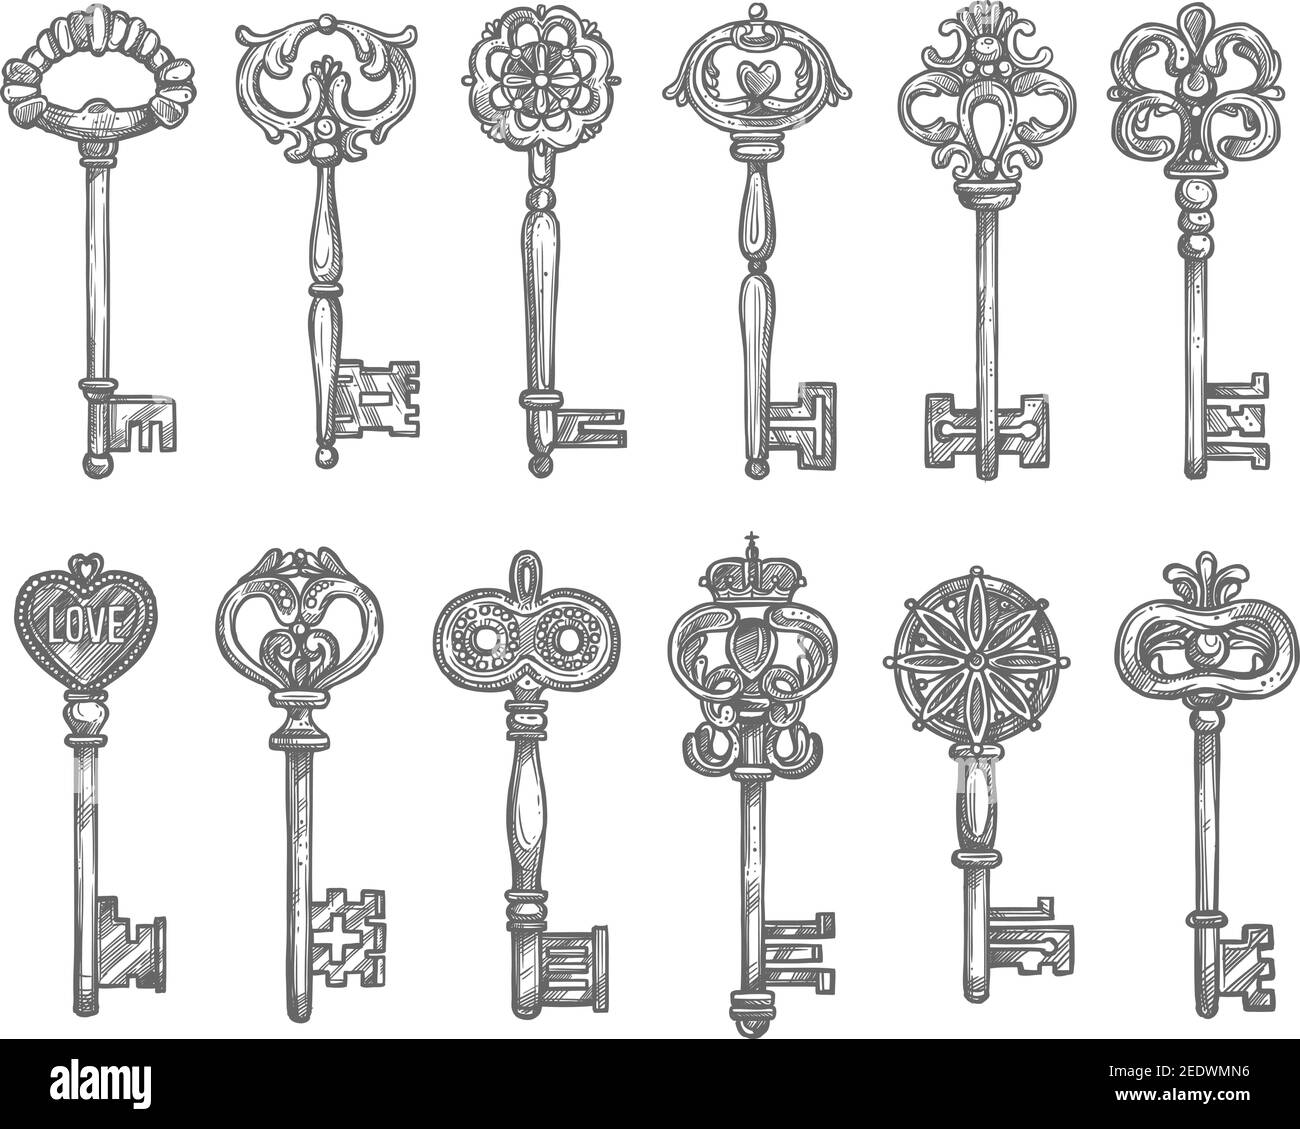 2er Set alte Schlüssel Türschlüssel - Vintage Retro